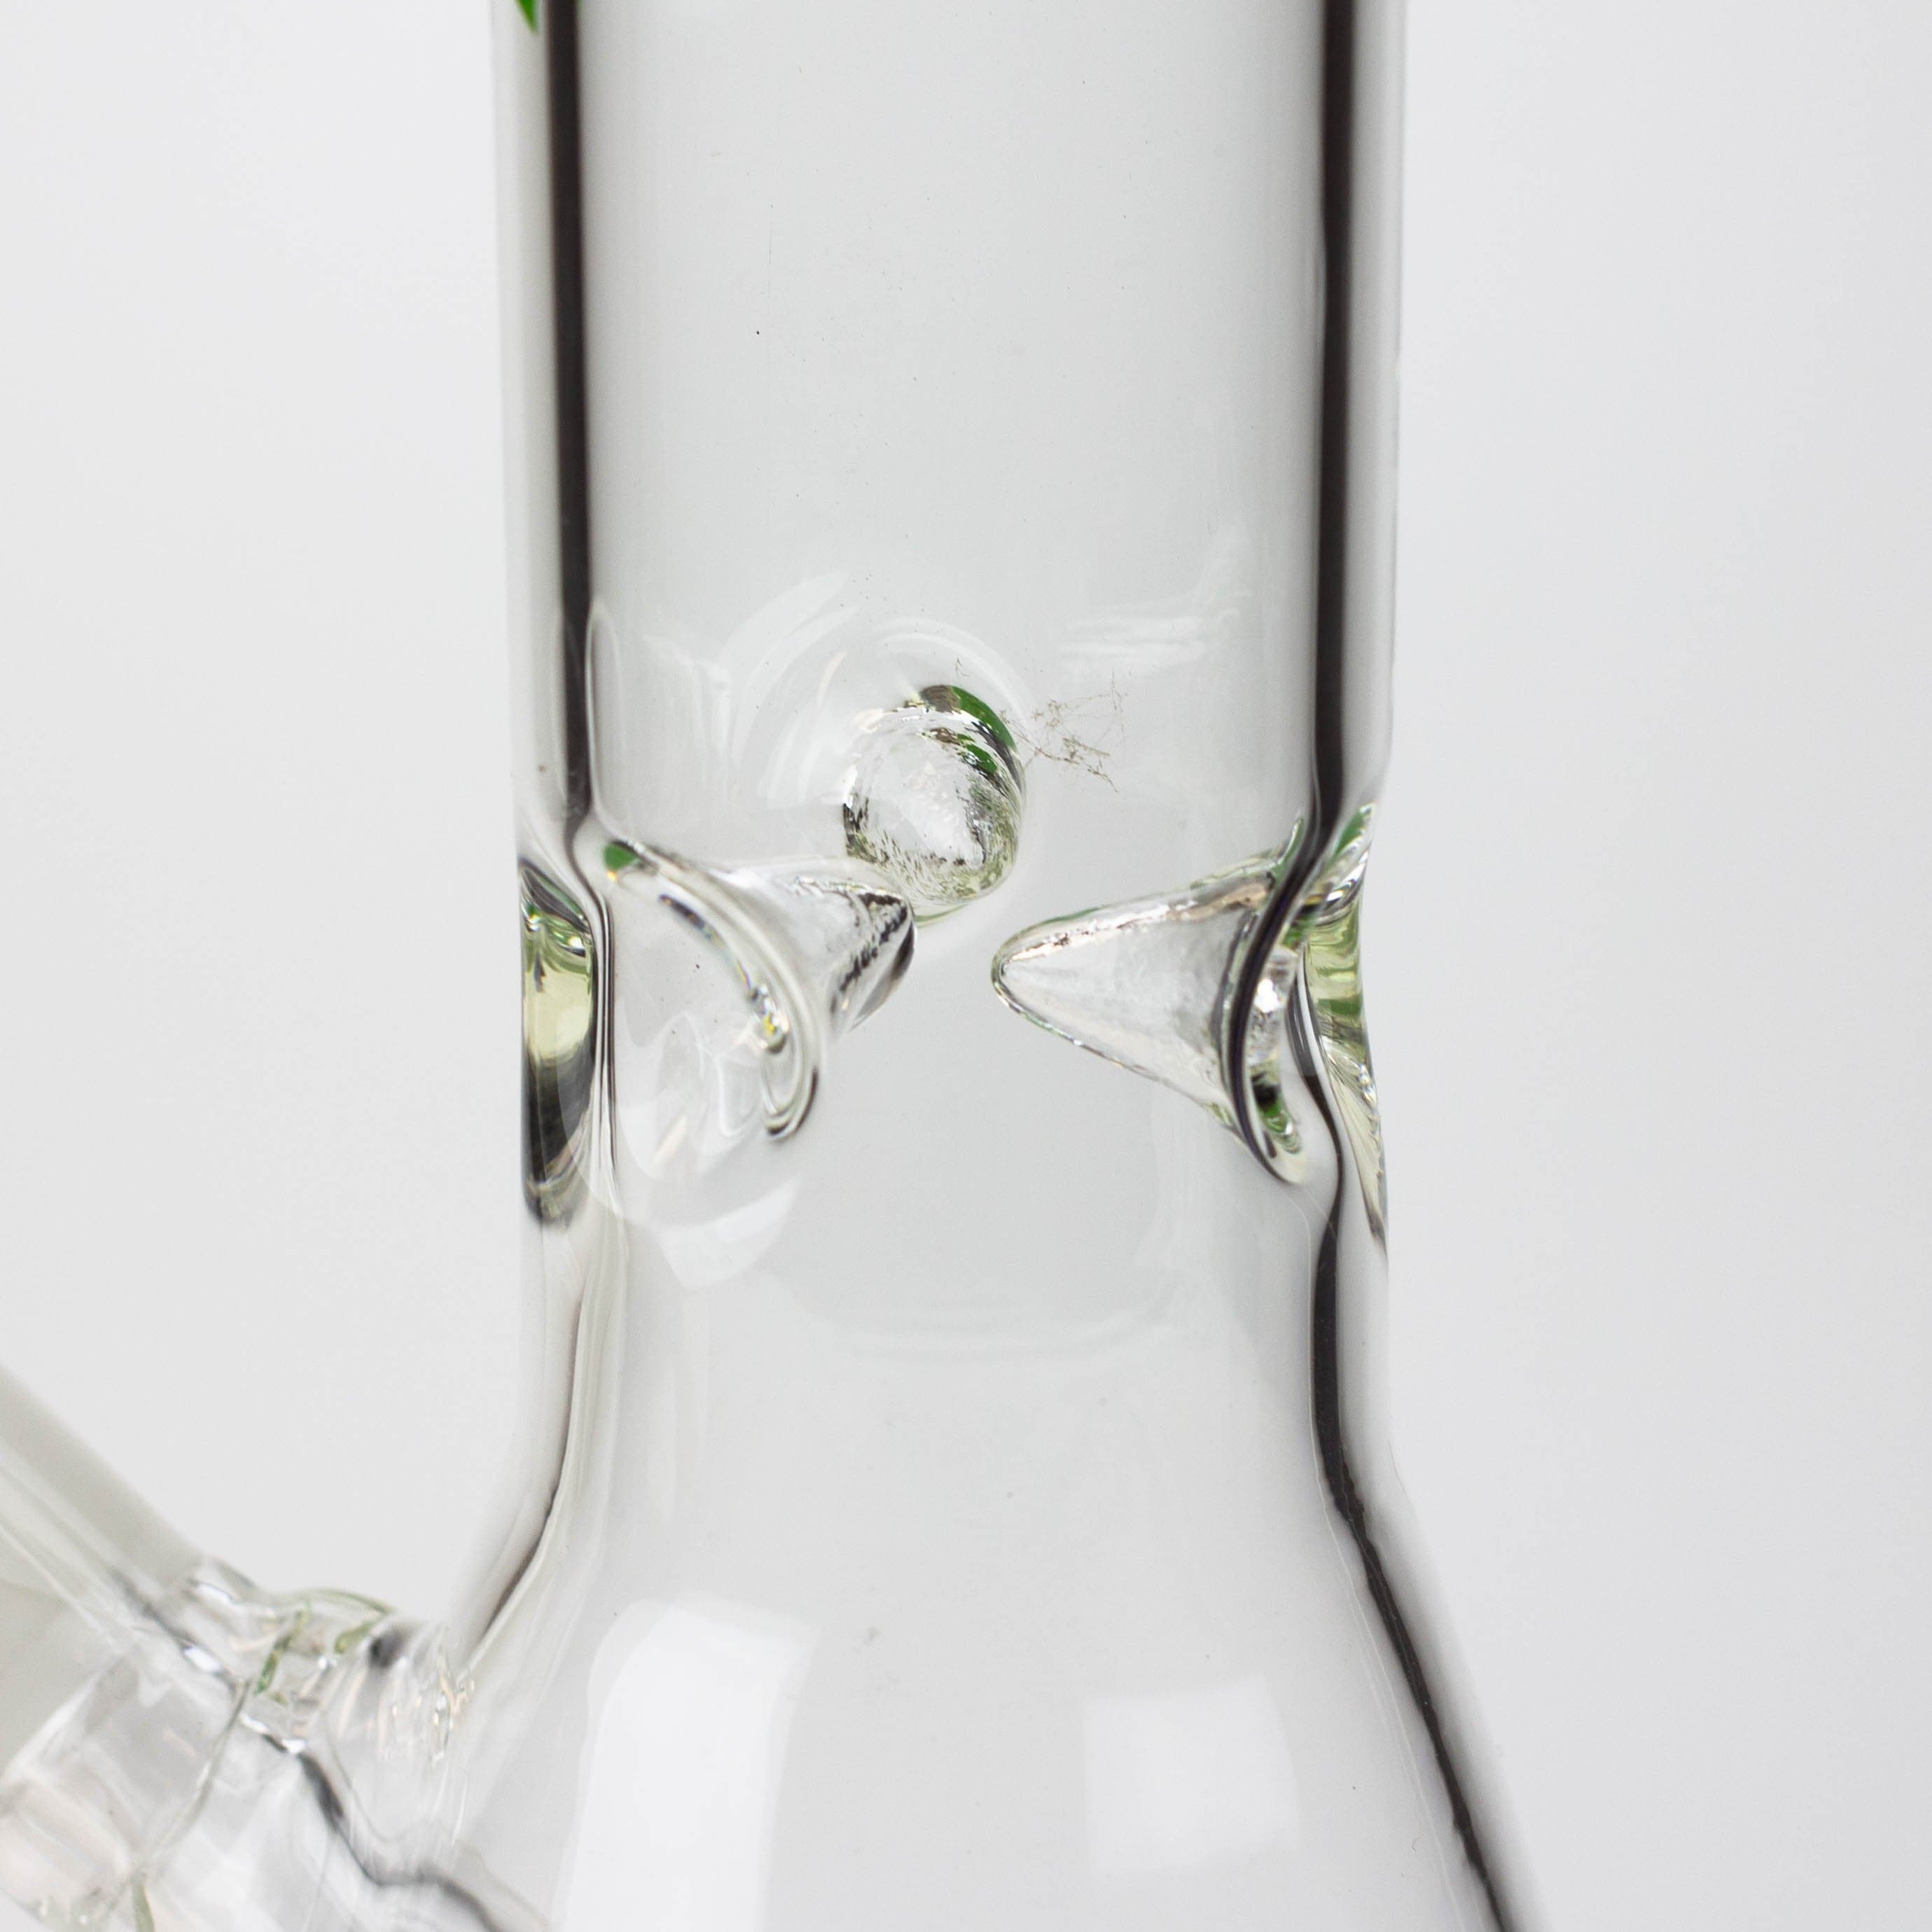 Toke beaker glass water pipes 12"_5